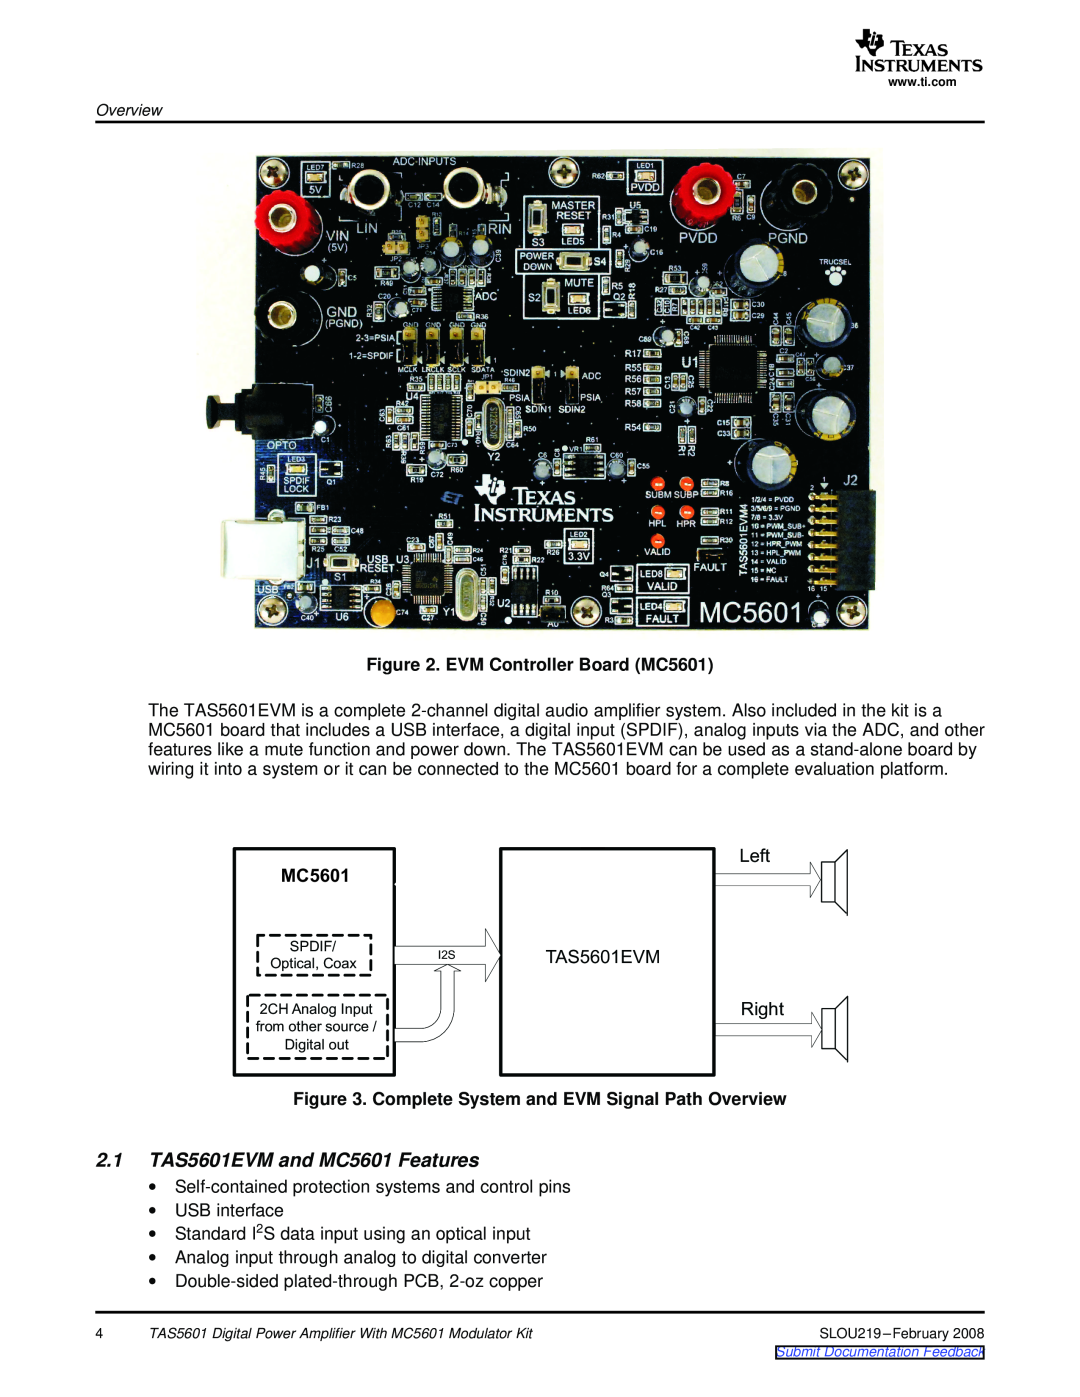 Texas Instruments manual 2.1TAS5601EVM and MC5601 Features, Left Right, EVM Controller Board MC5601 